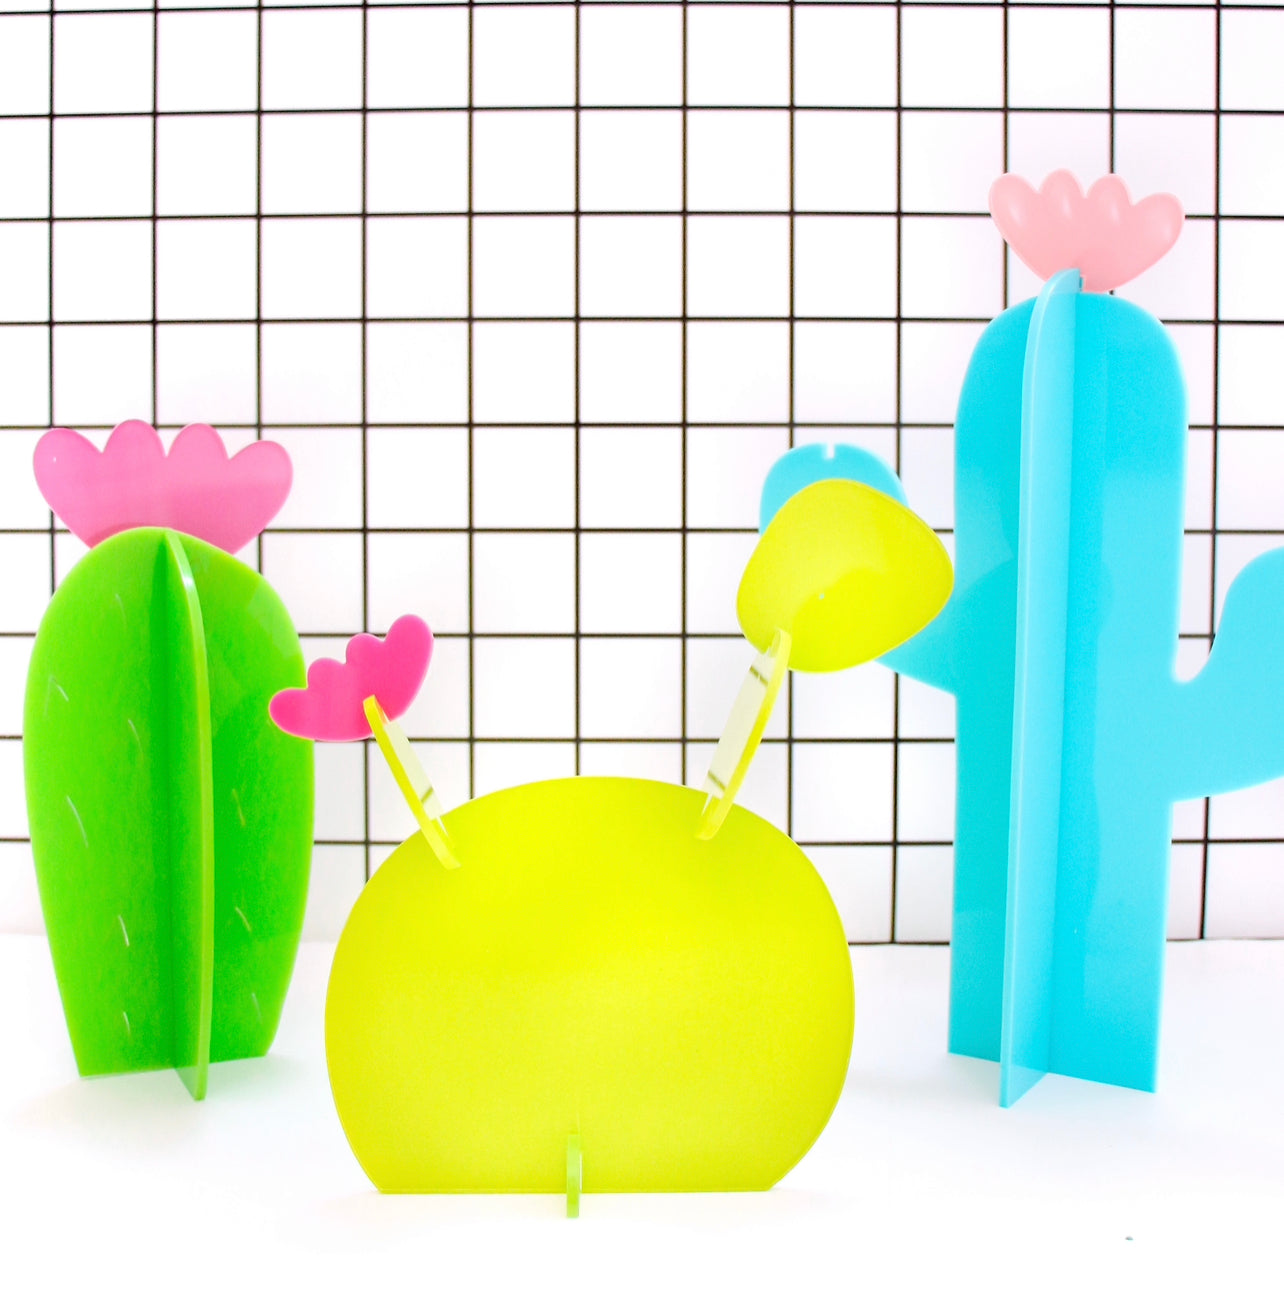 Acrylic cactus set by Kailo Chic